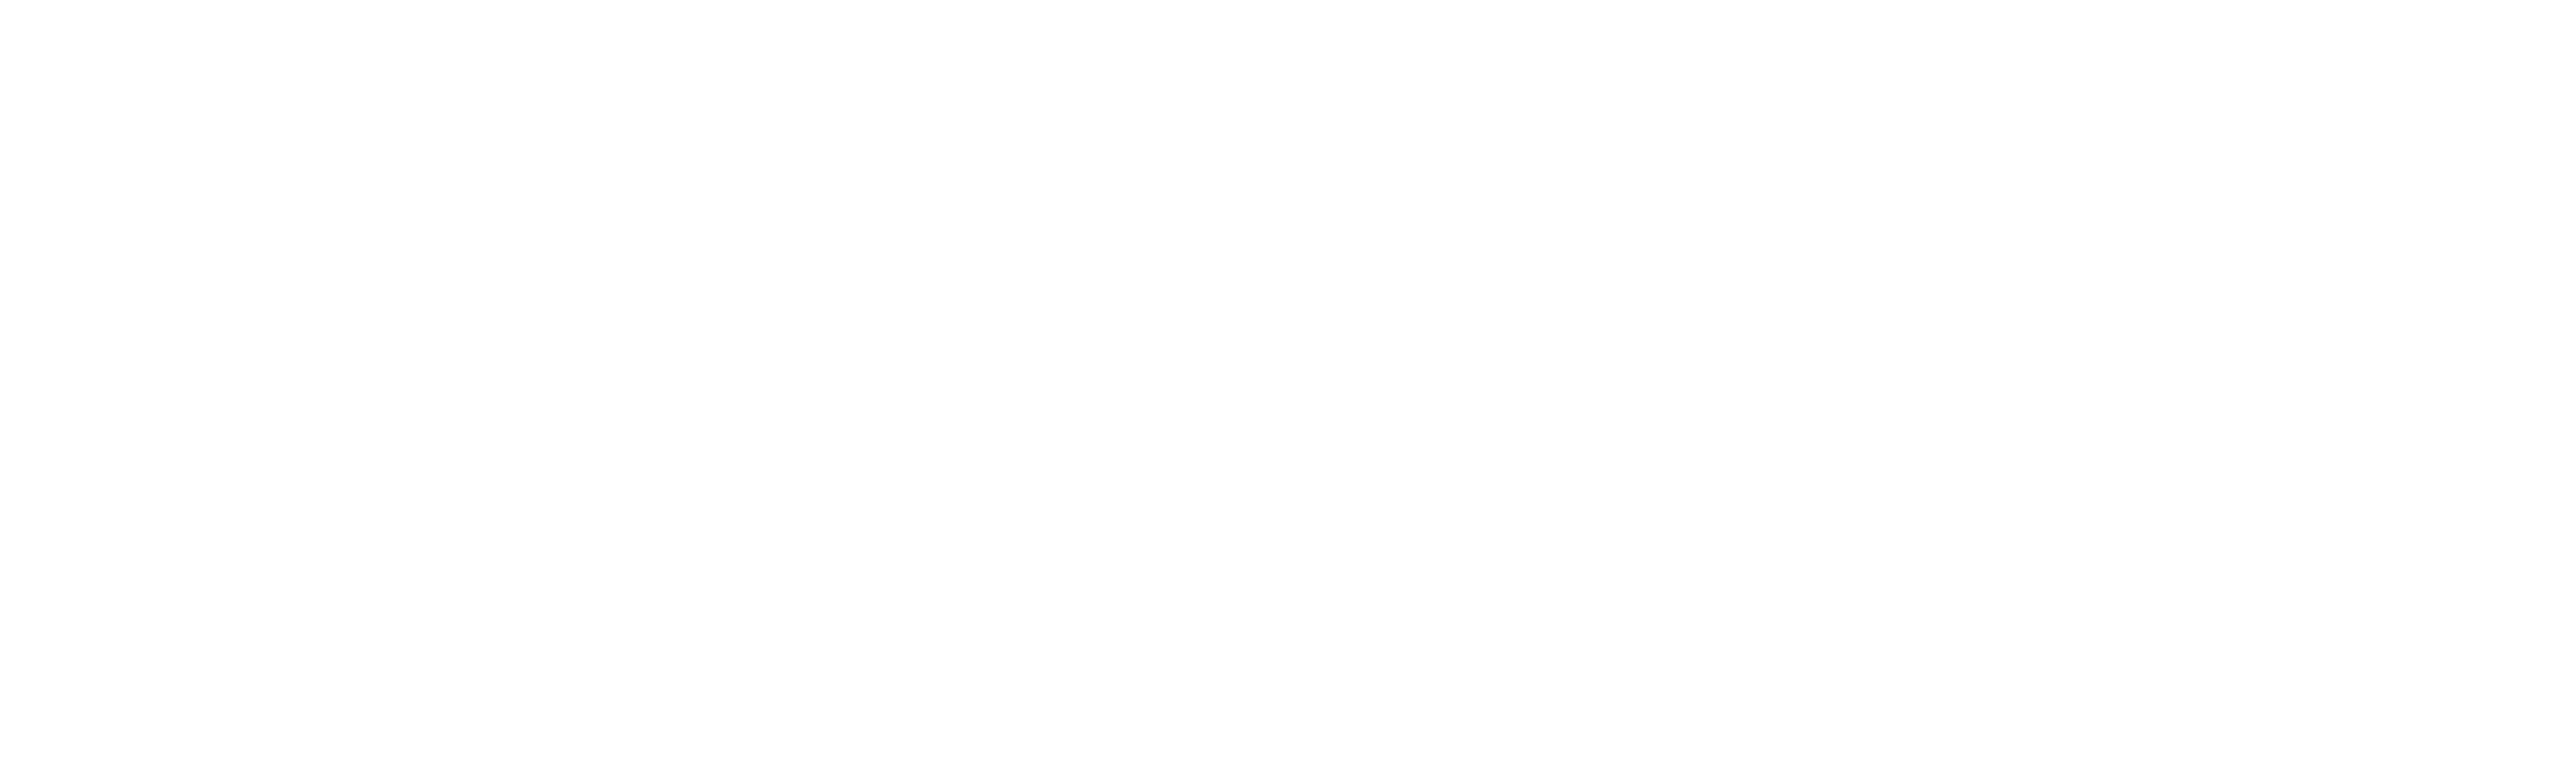 Goldman Sachs 10,000 Small Business Alumni